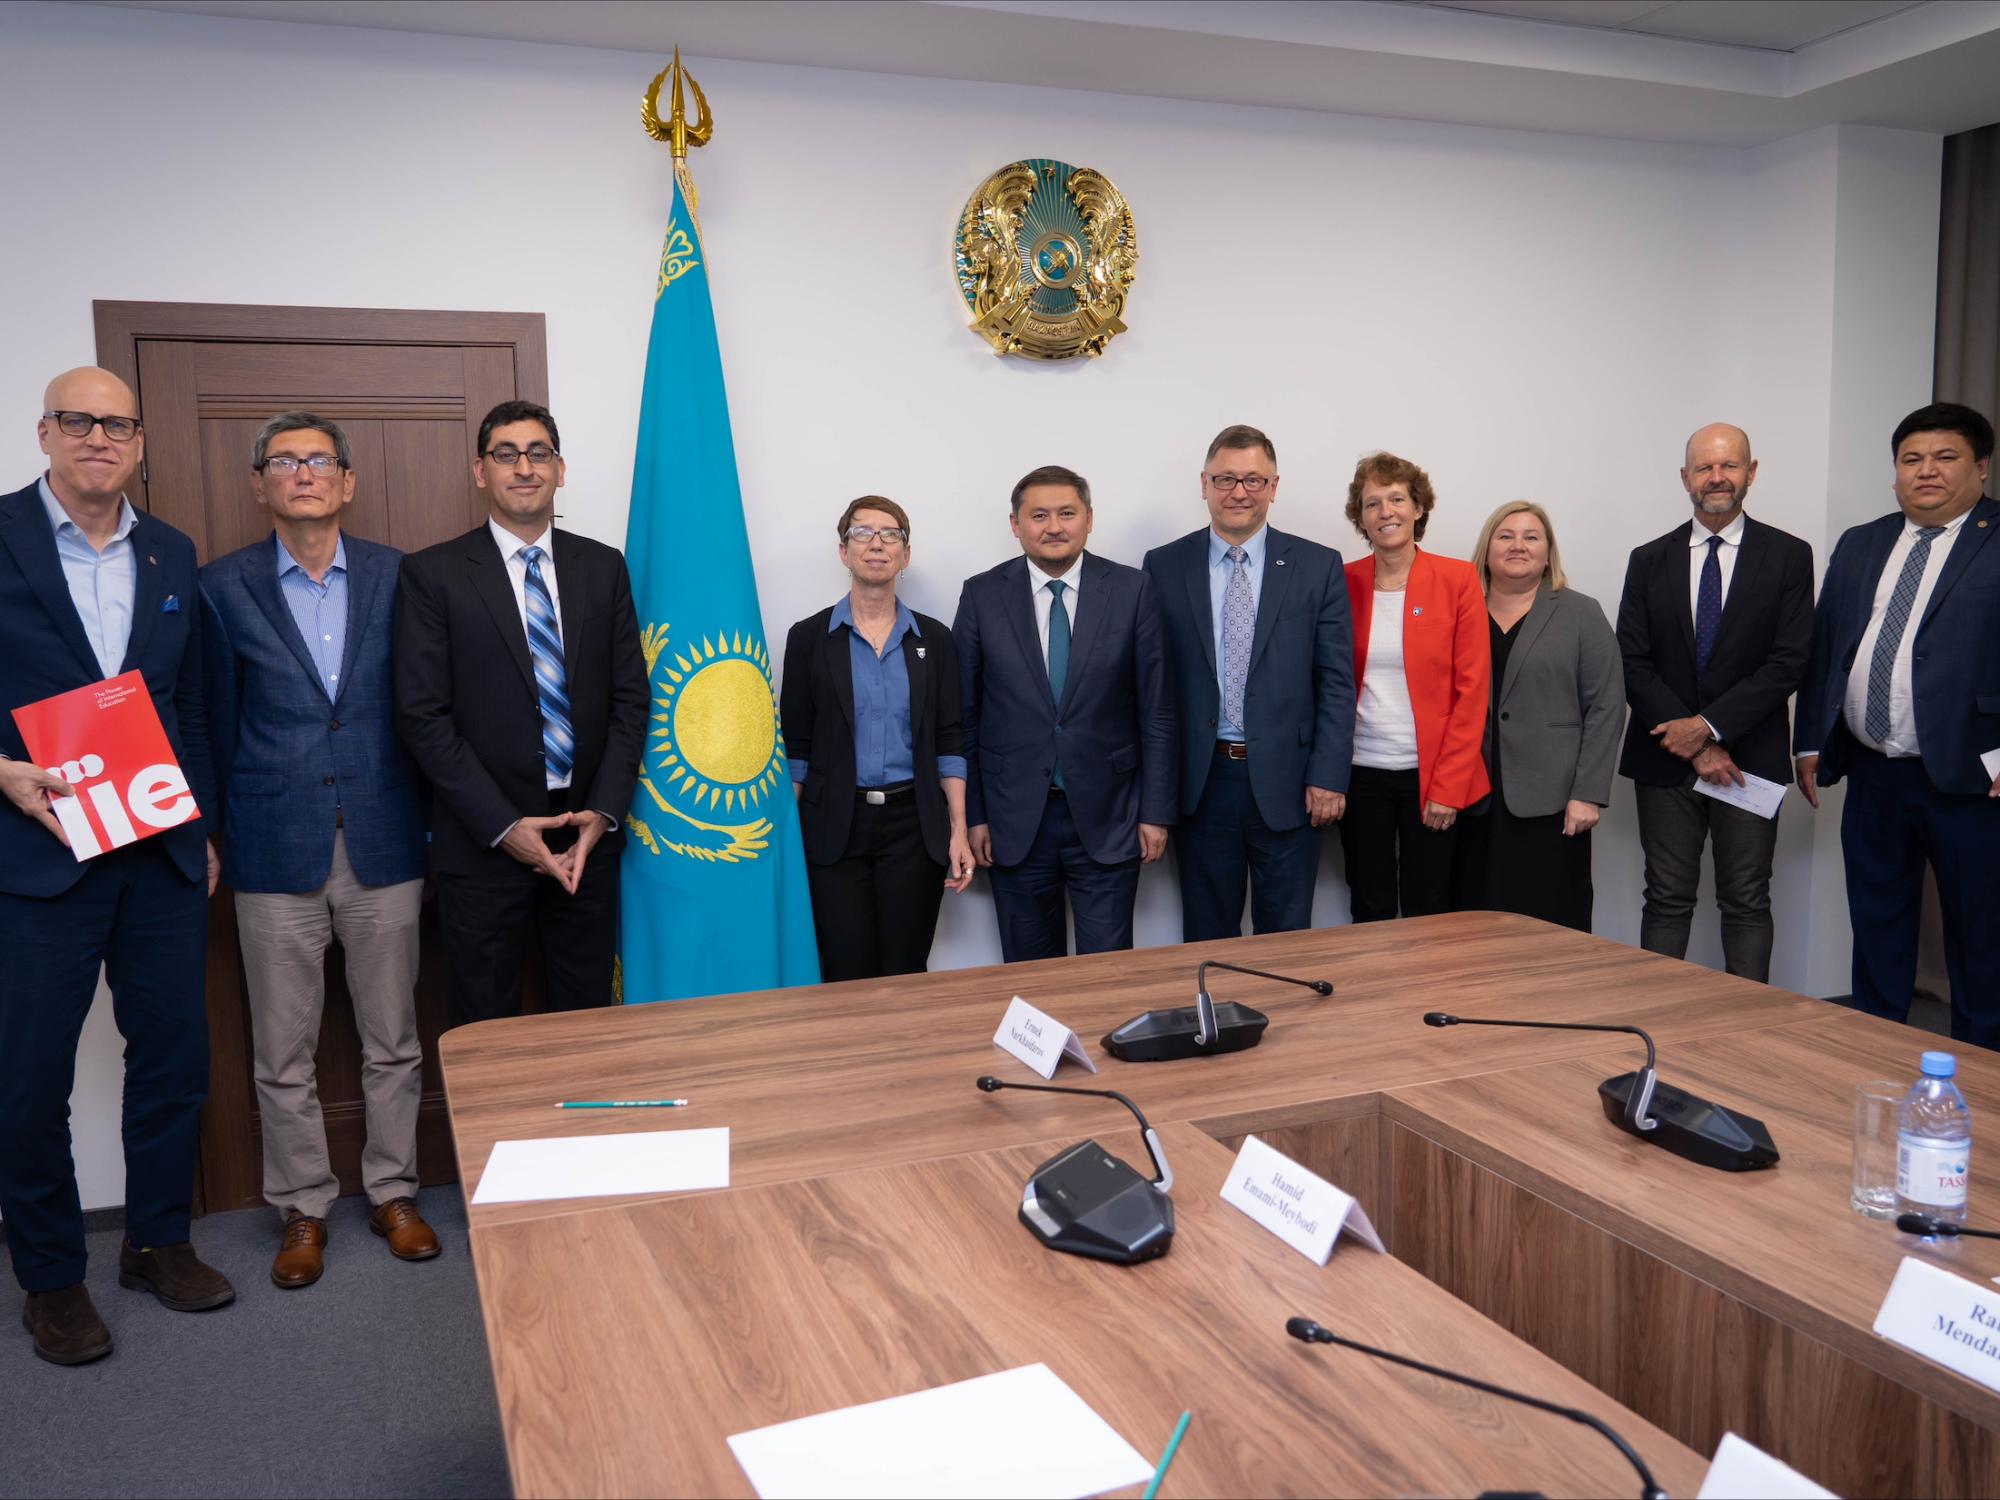 Penn State Delegation advances partnerships with universities in Kazakhstan